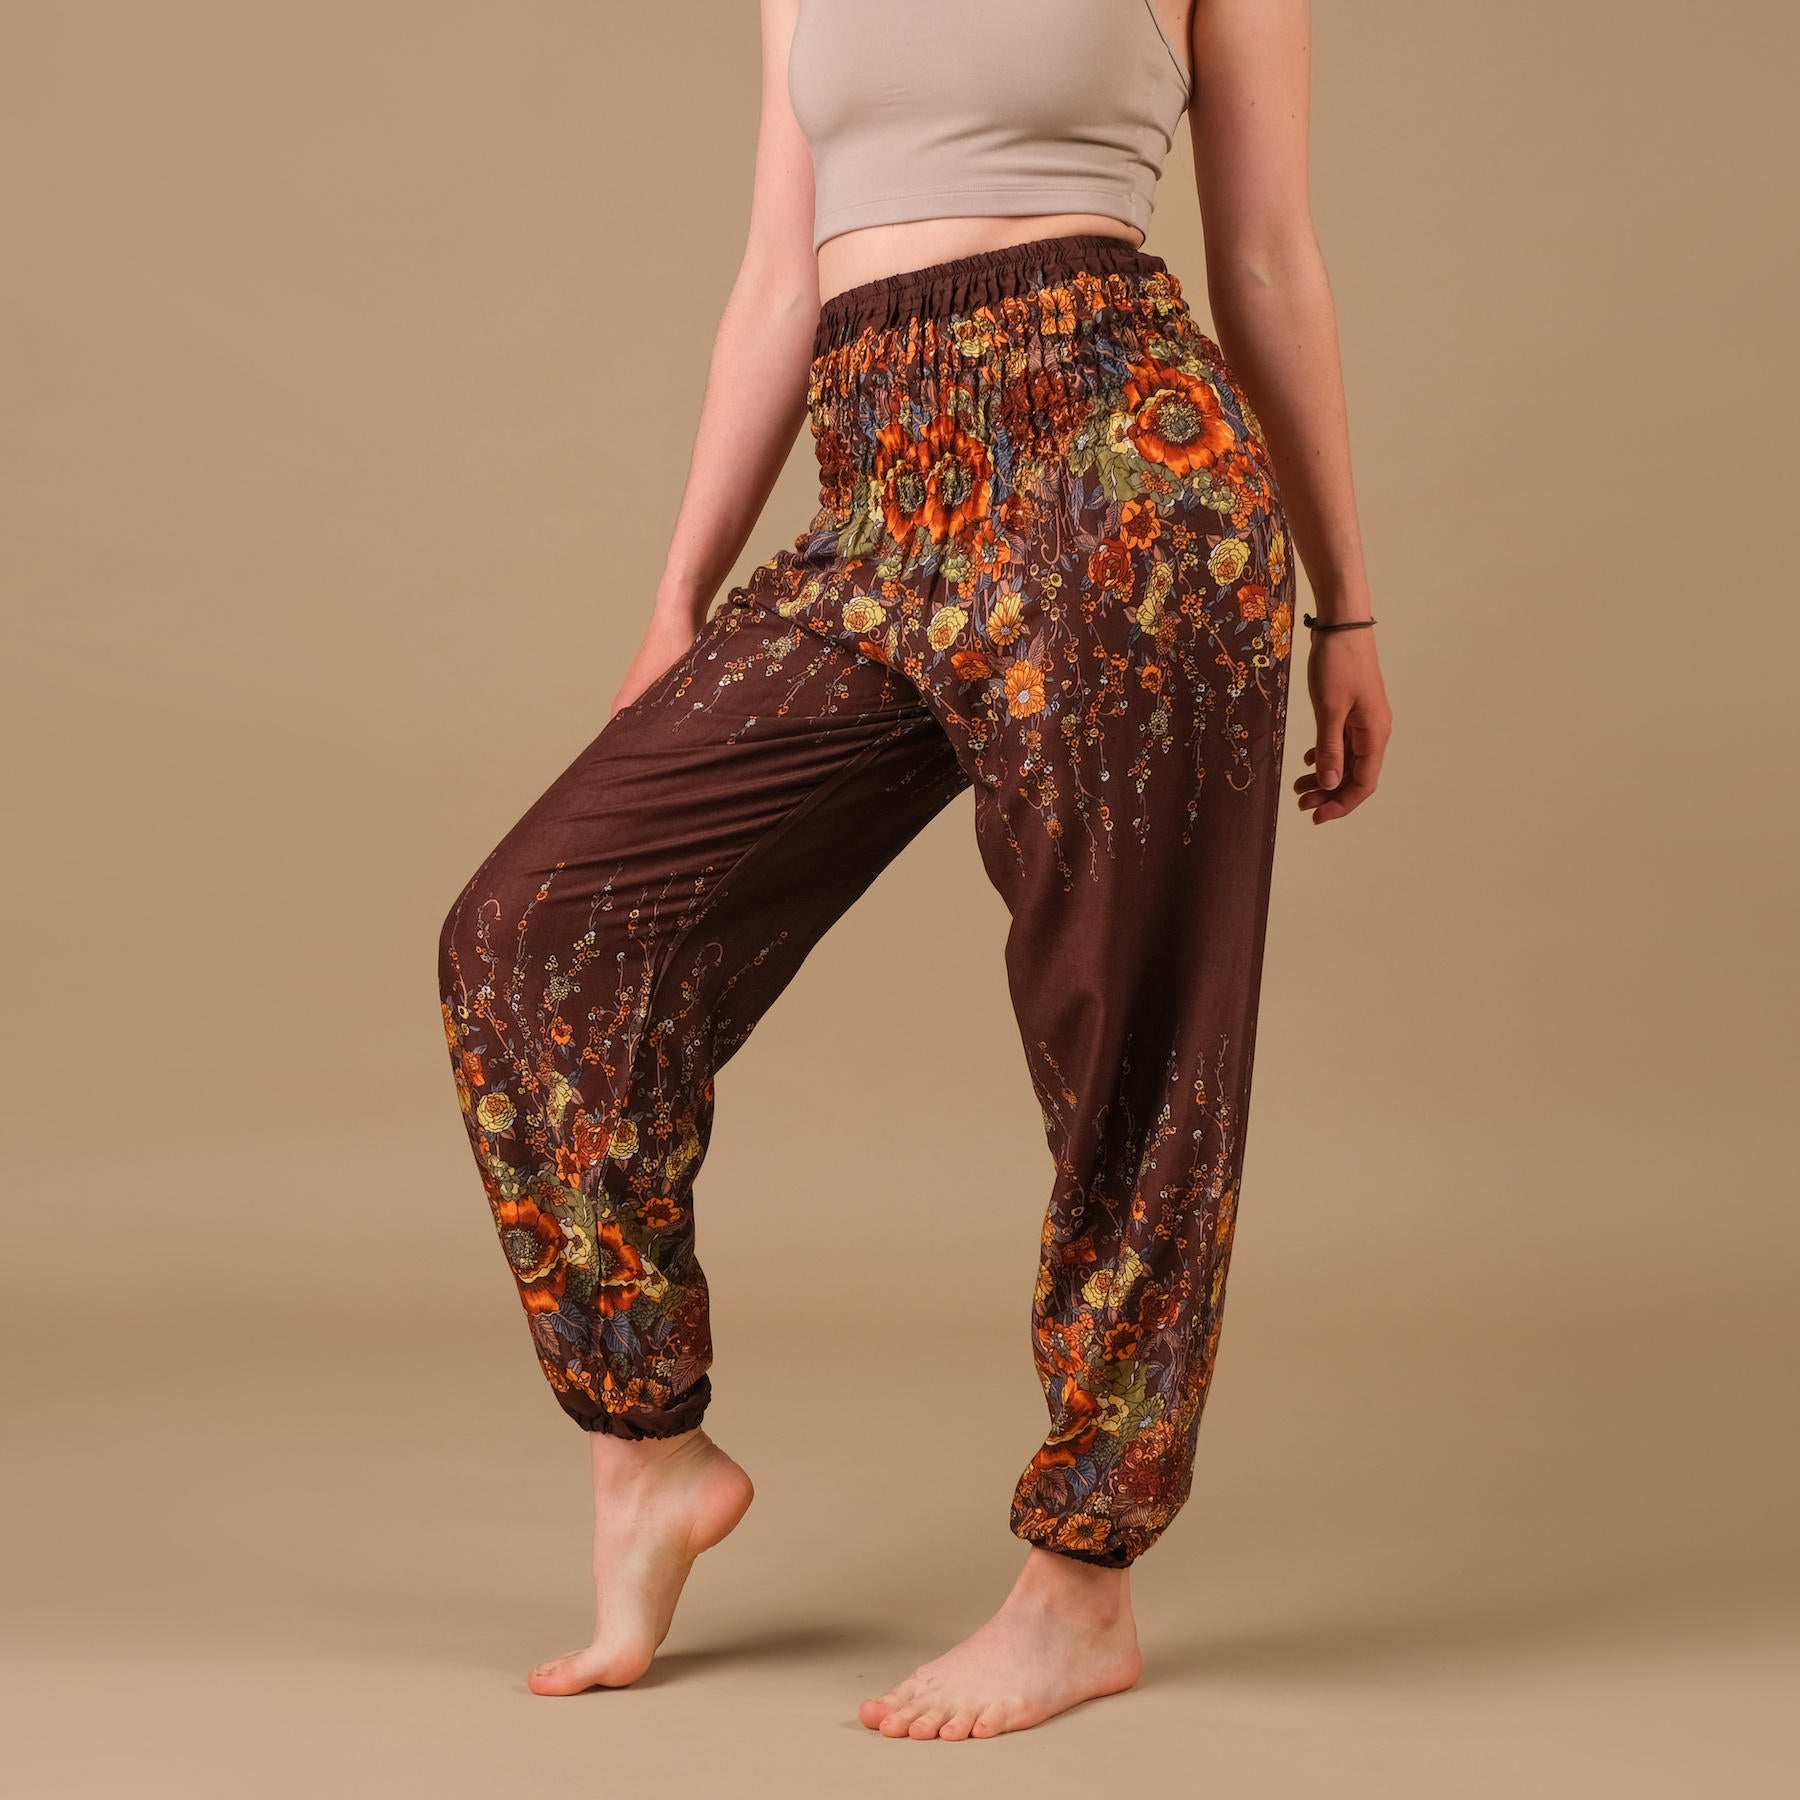 Pantaloni yoga harem marrone fiore